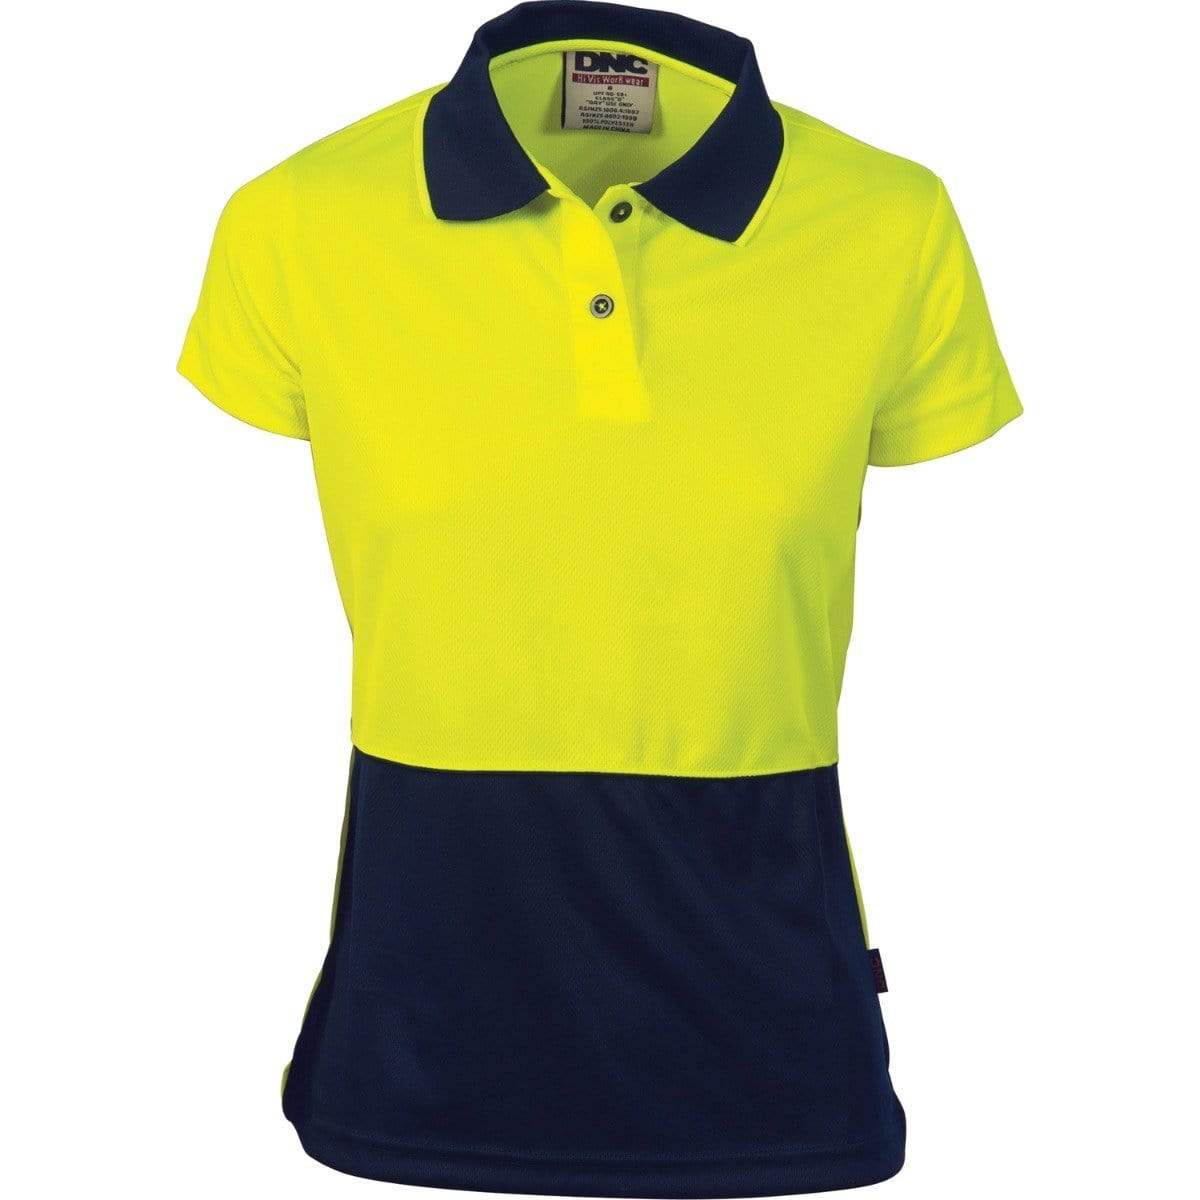 Dnc Workwear Ladies Hi-vis Two-tone Short Sleeve Polo - 3897 Work Wear DNC Workwear Yellow/Navy 8 